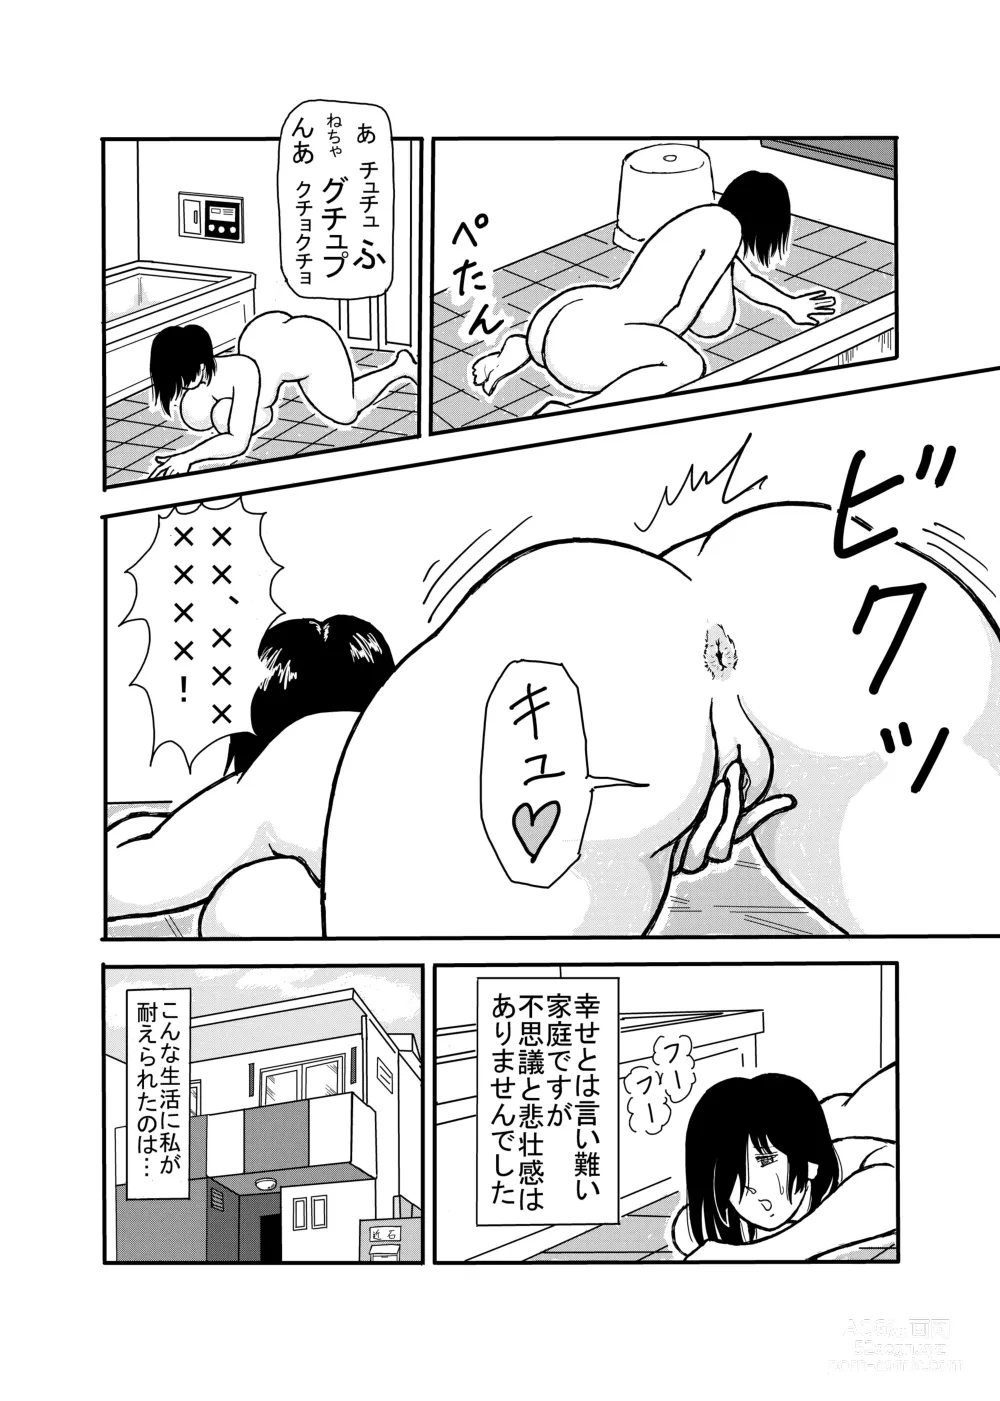 Page 5 of doujinshi 息子と二人きりで暮らすことになりました―初めての膣内射精―